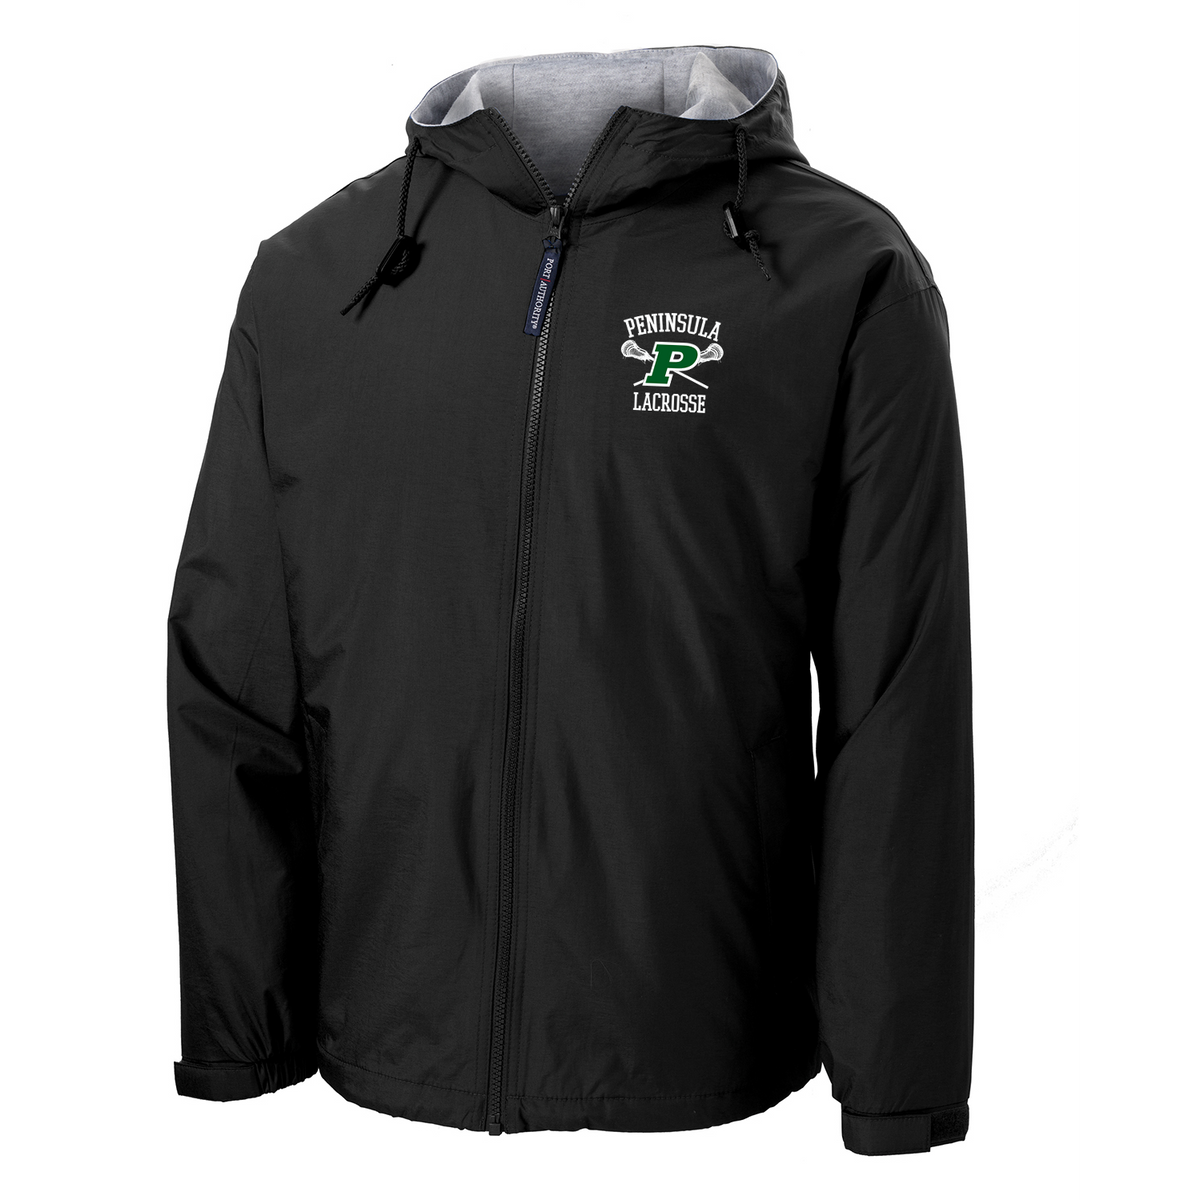 Peninsula Lacrosse Hooded Jacket